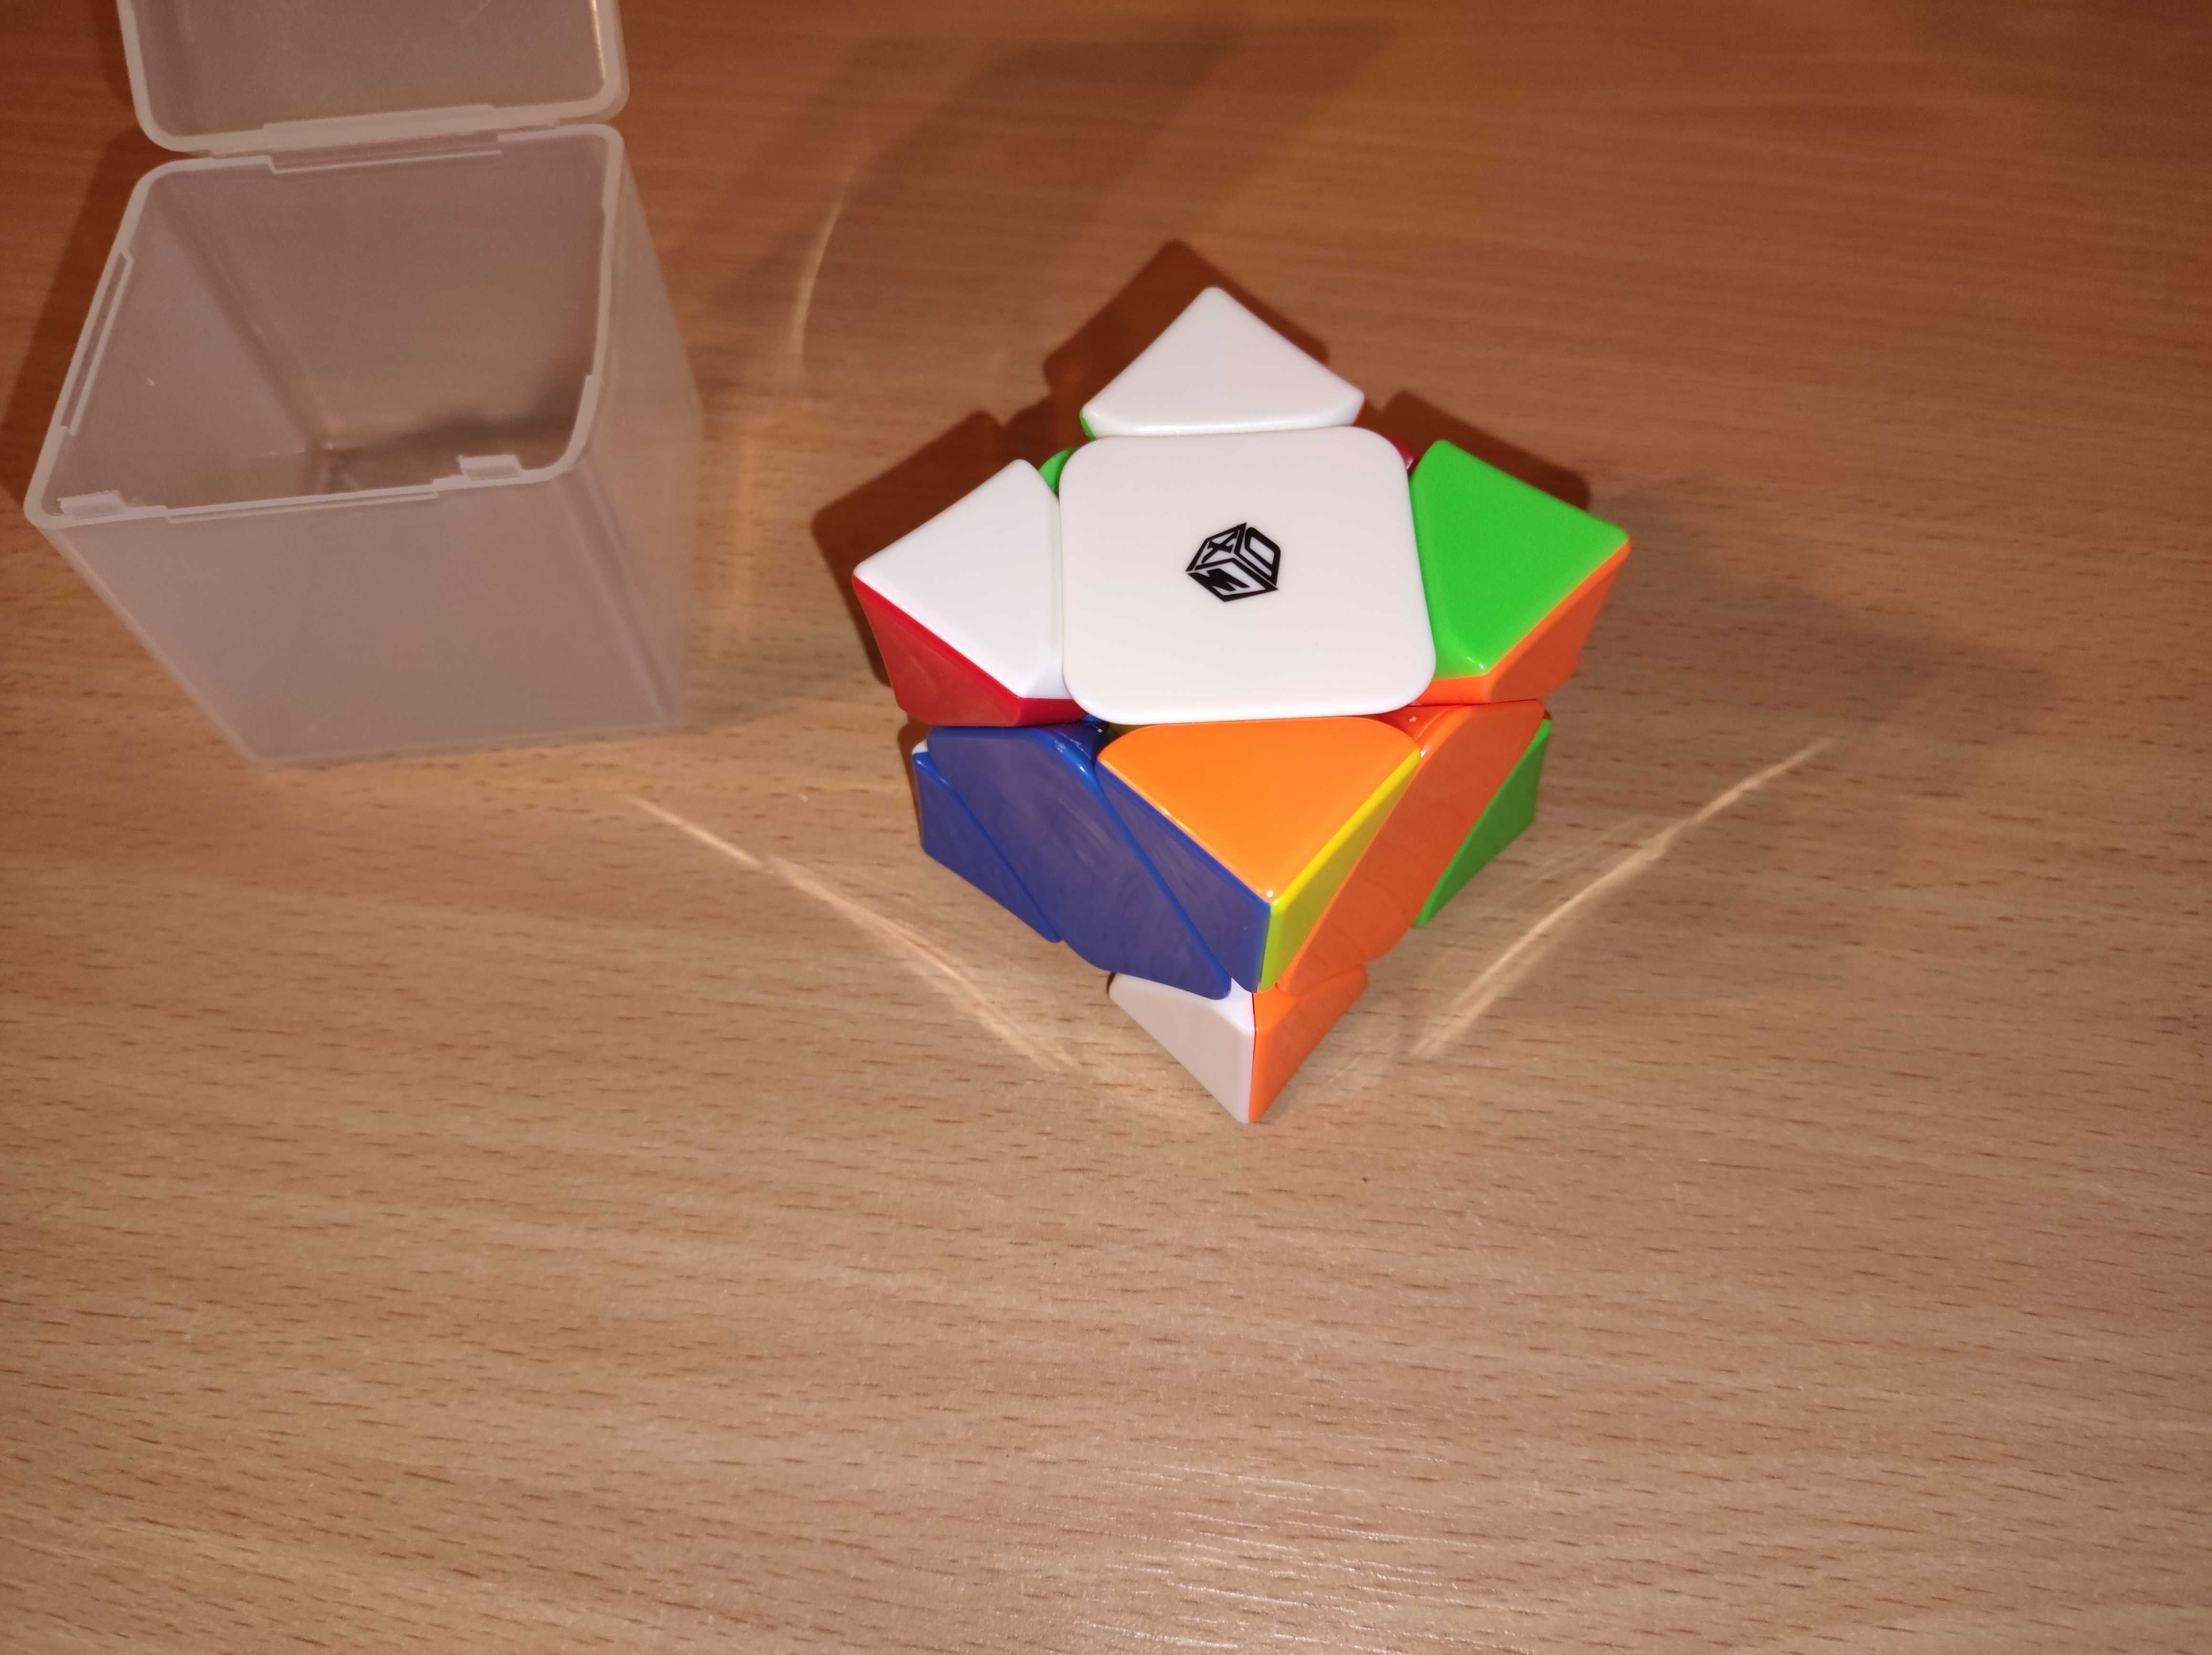 Kostka Rubika układanka X-Man Design Wingy Skewb M